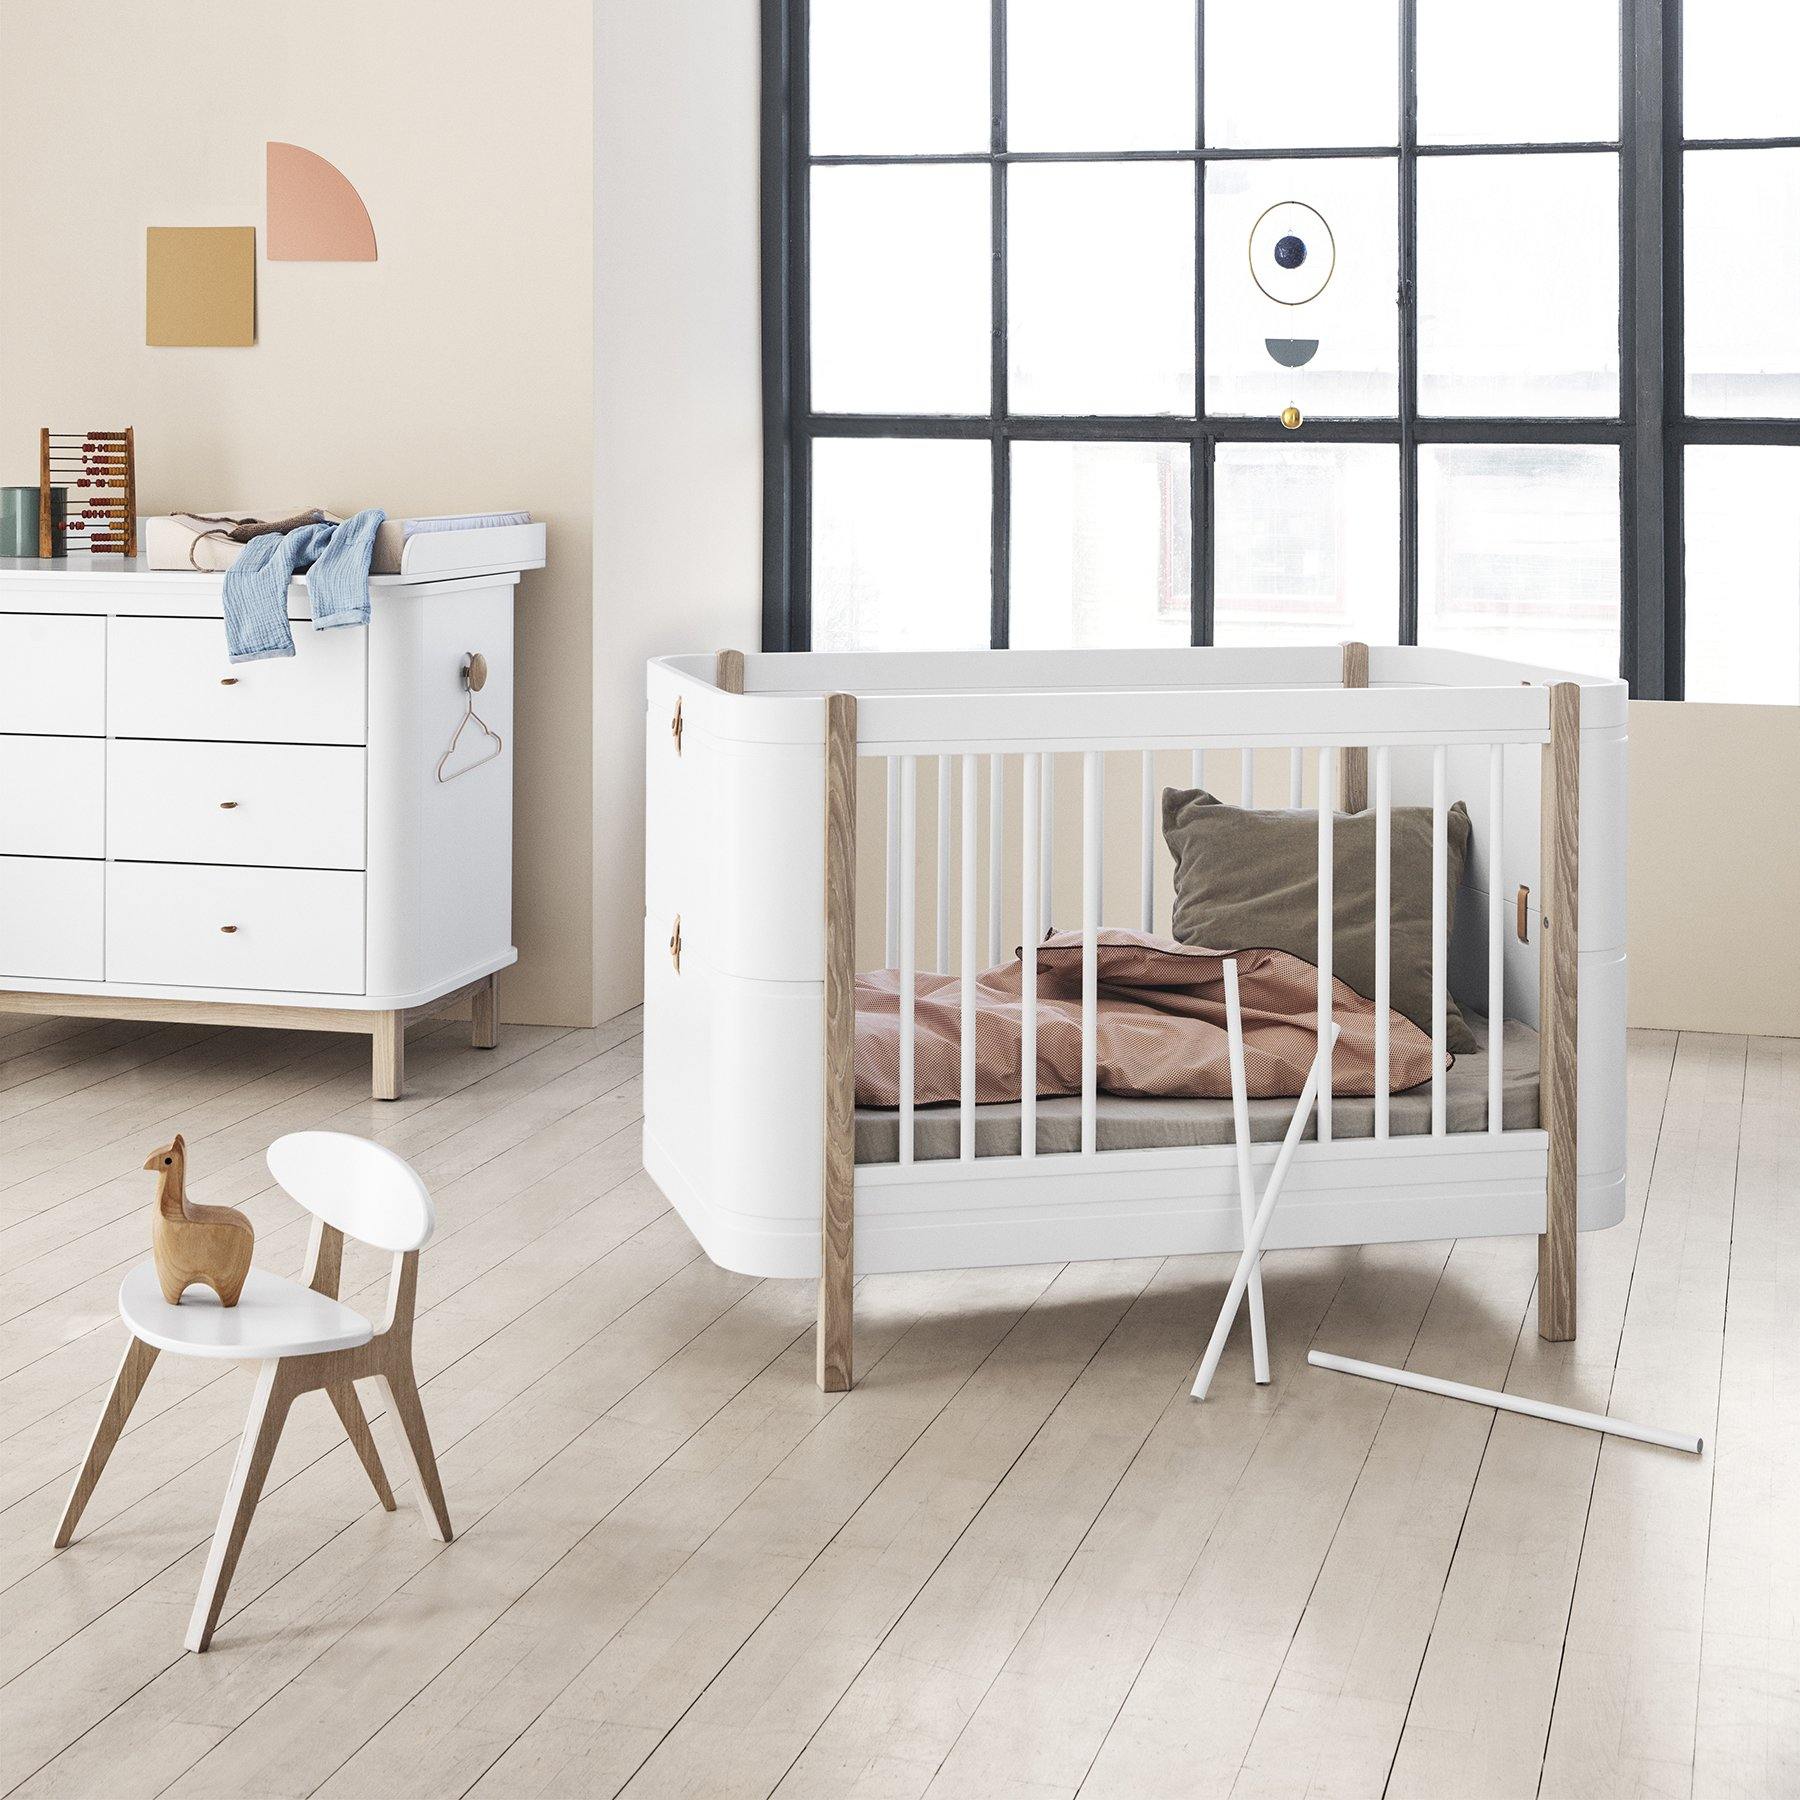 Oliver Furniture Wood Collection Mini+ inkl. Umbauteile Bett 68x122/162 cm, weiß/eiche